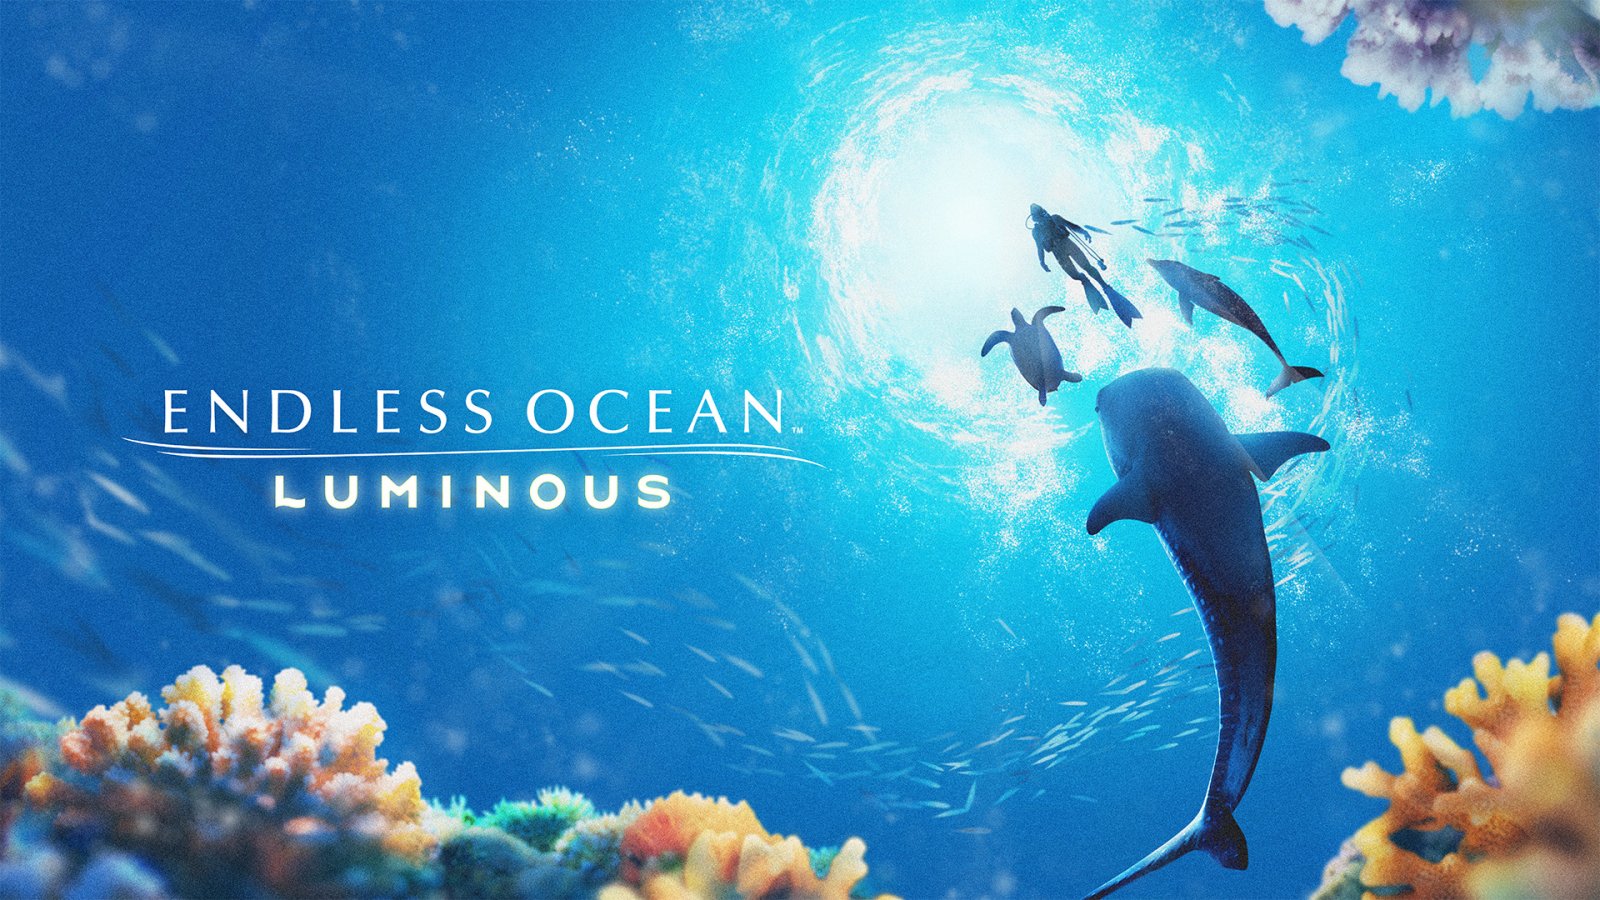 Endless Ocean Luminous annunciato per Nintendo Switch